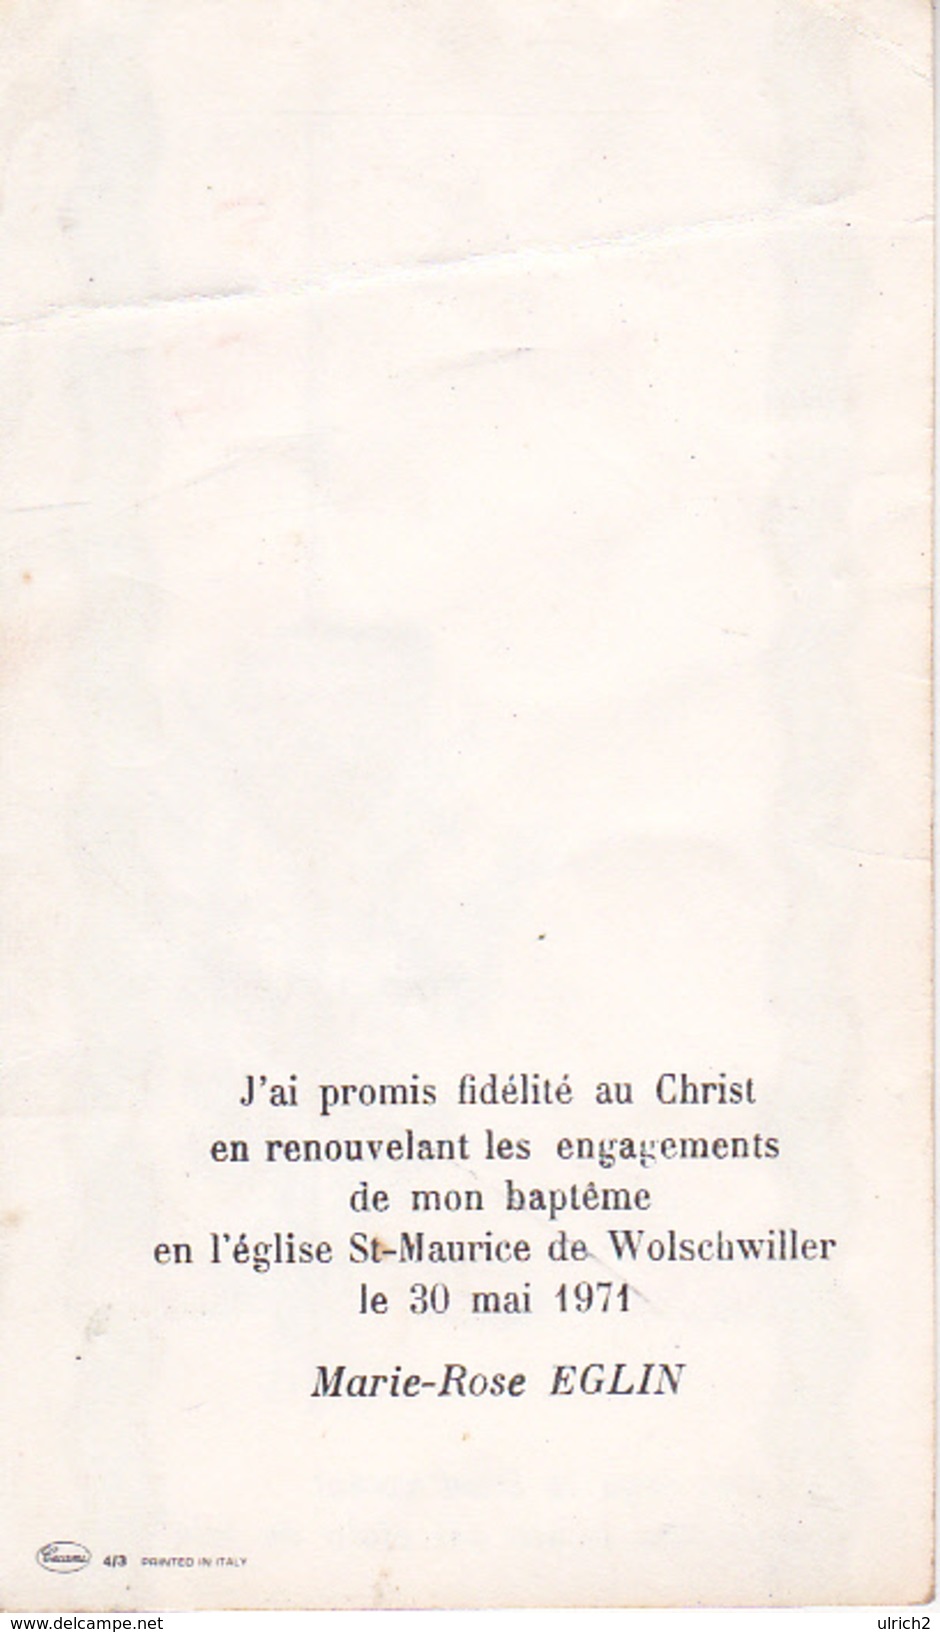 Andachtsbild - Image Pieuse - Communion - St-Maurice De Wolschwiller - 1971 - Marie-Rose Eglin 7*12cm (29435) - Andachtsbilder